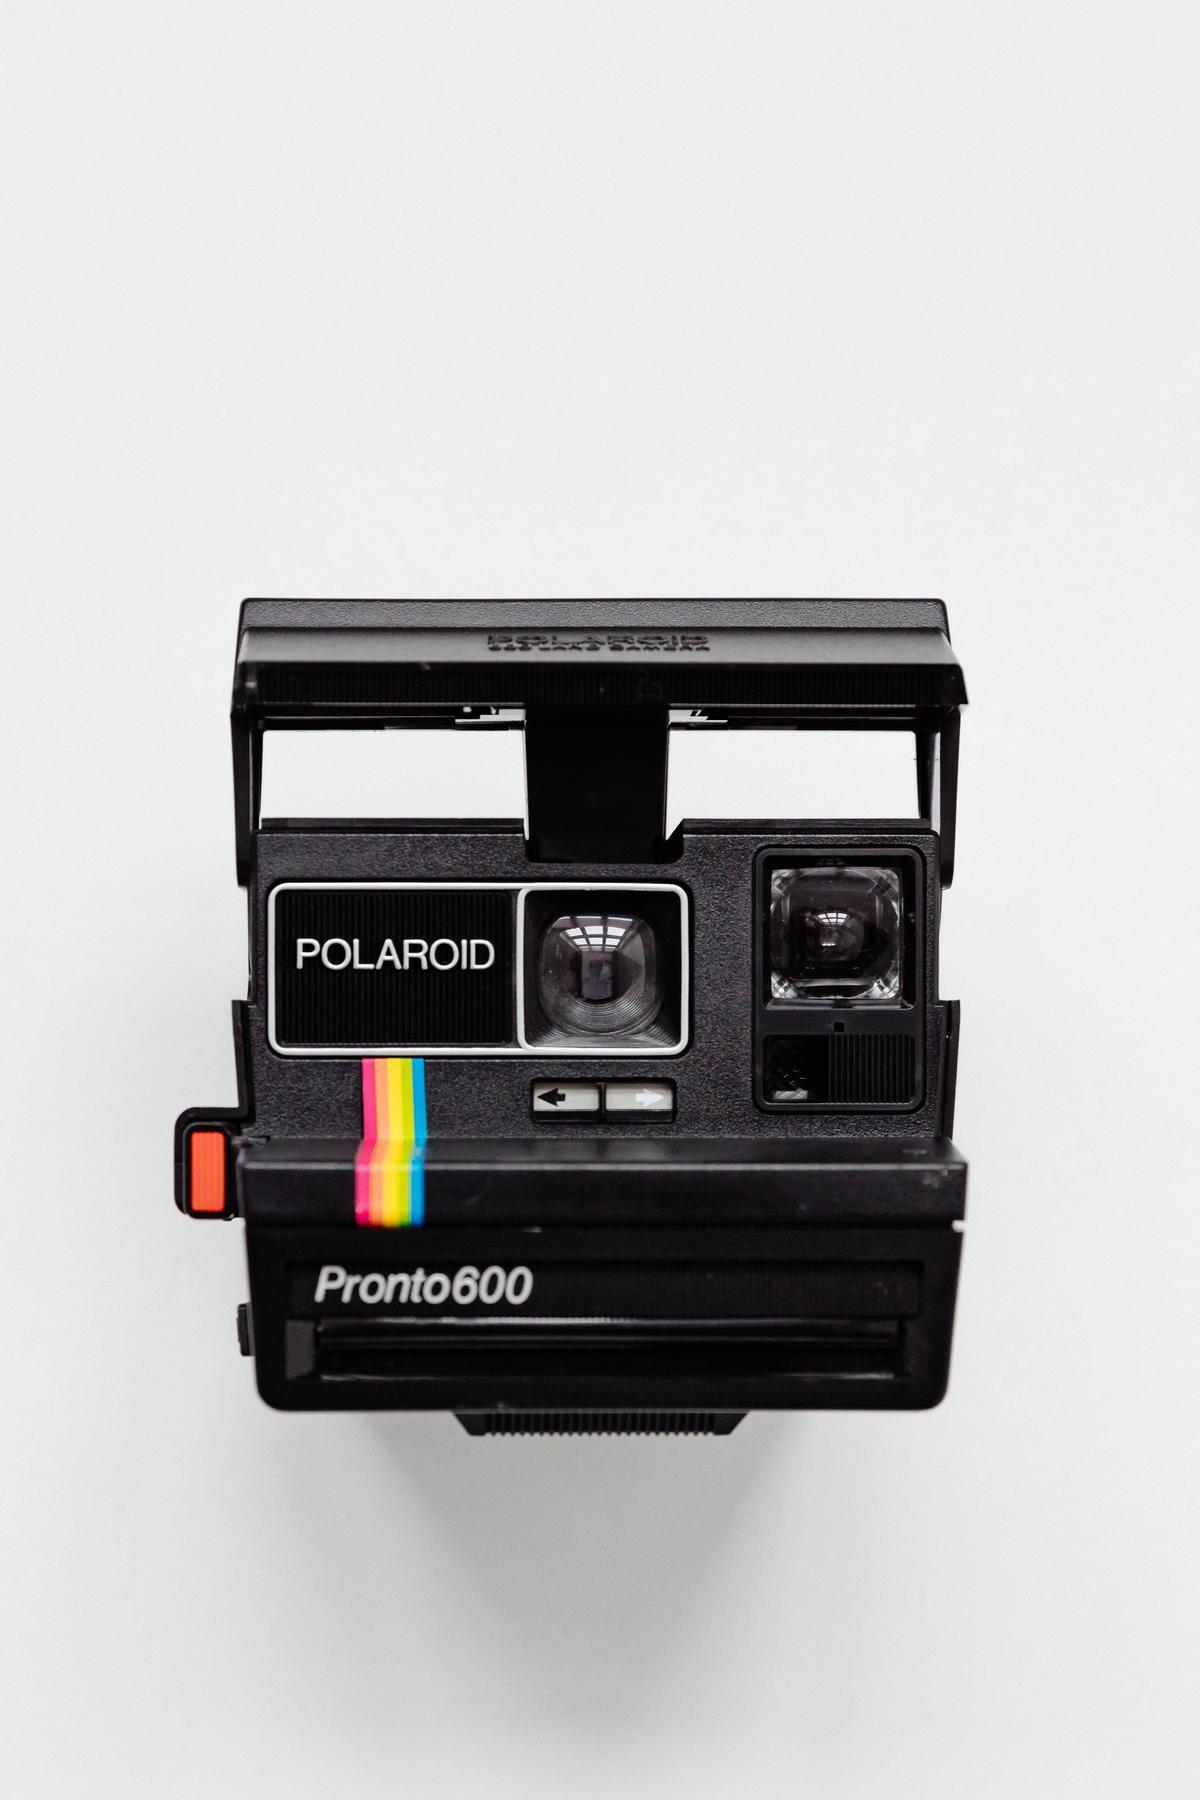 Polaroid Camera Revival - Image depicting a Polaroid camera against a retro backdrop